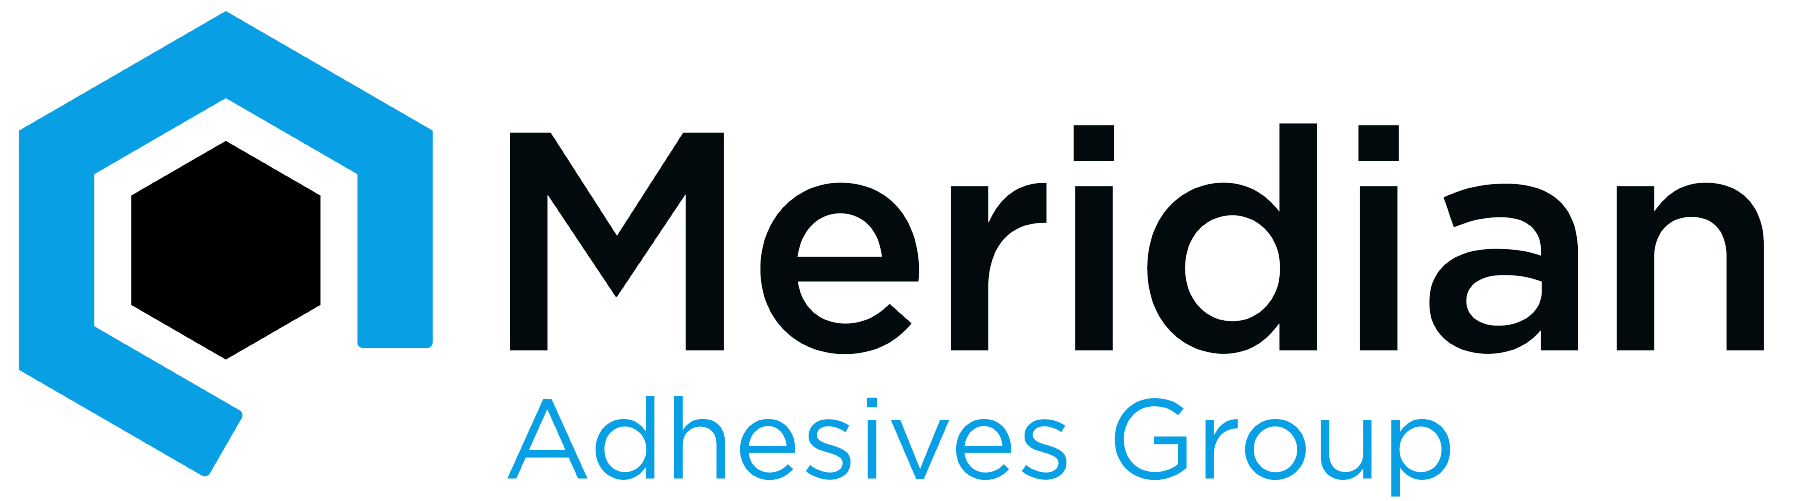 Meridian Adhesives G